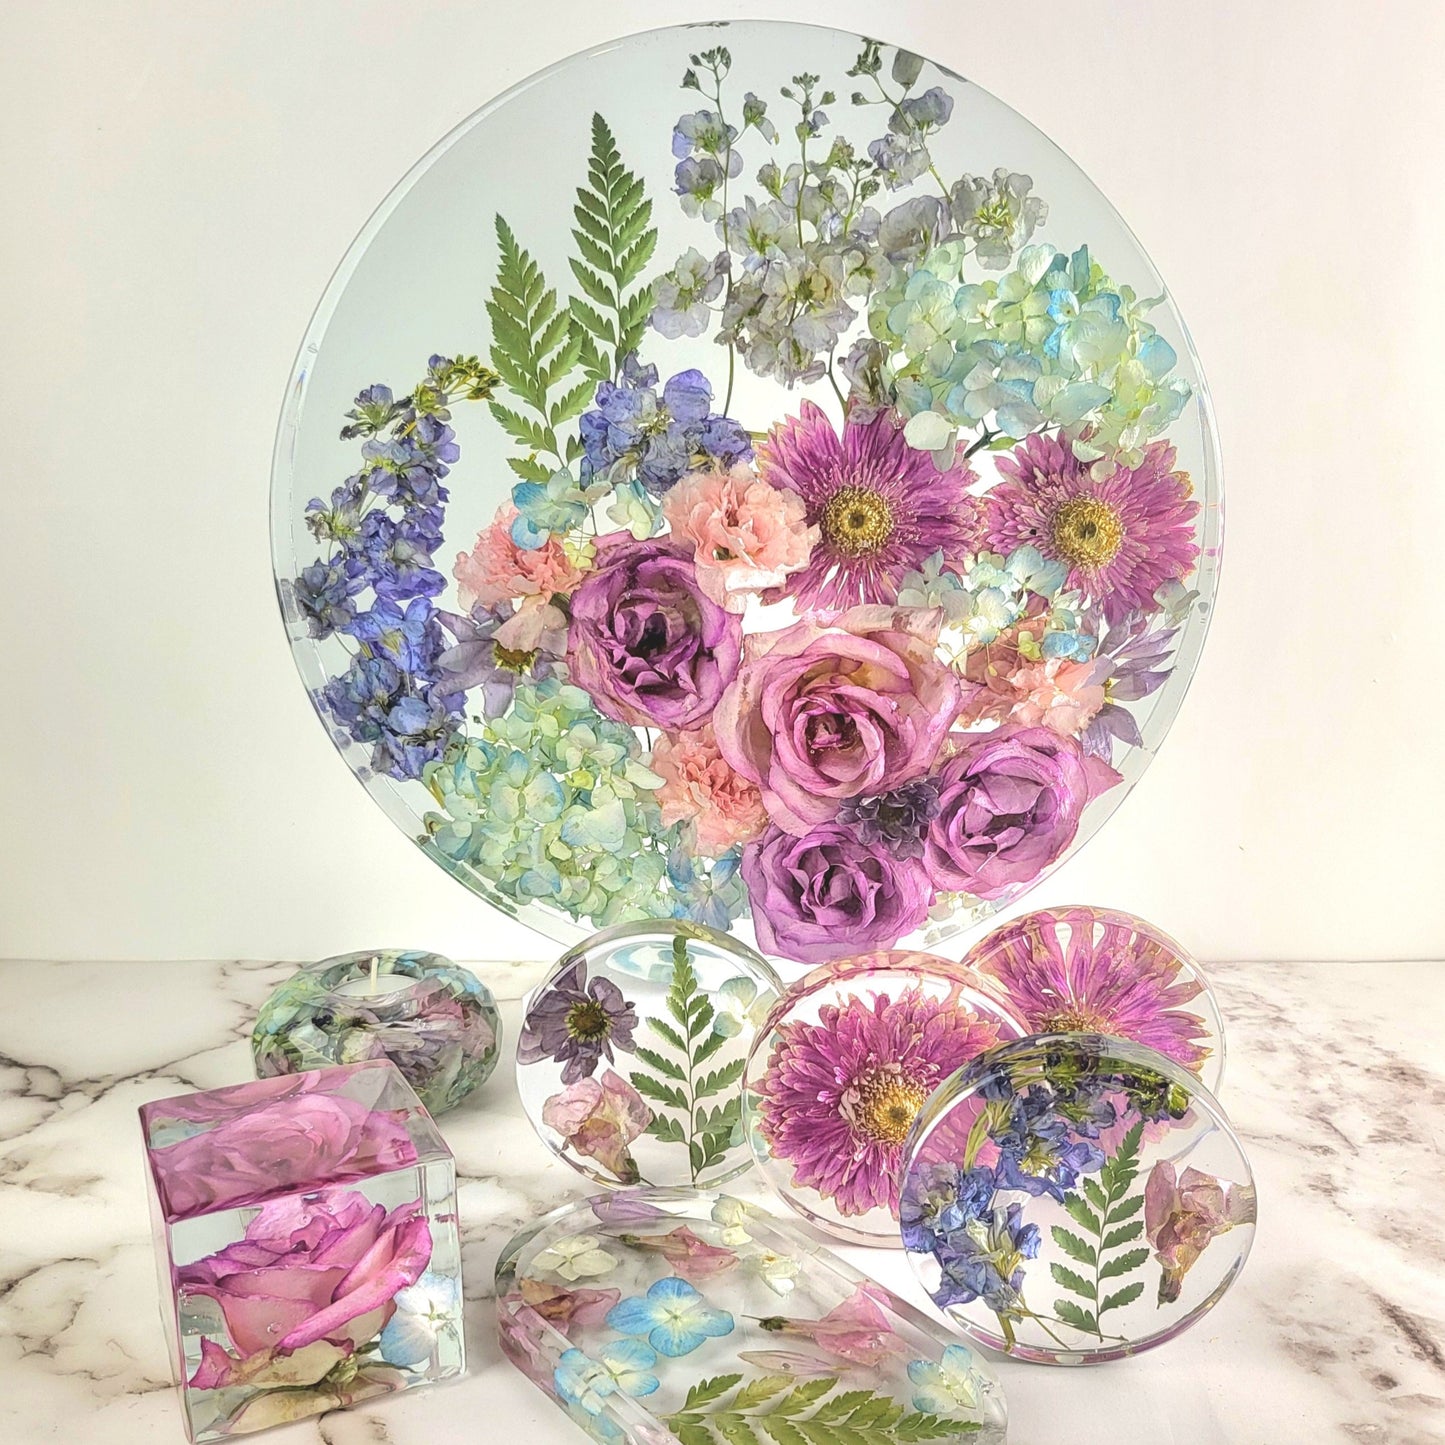 14" Round 3D Resin Wedding Bouquet Preservation Keepsake Gift Save Your Wedding Flowers Forever - flofloflowery